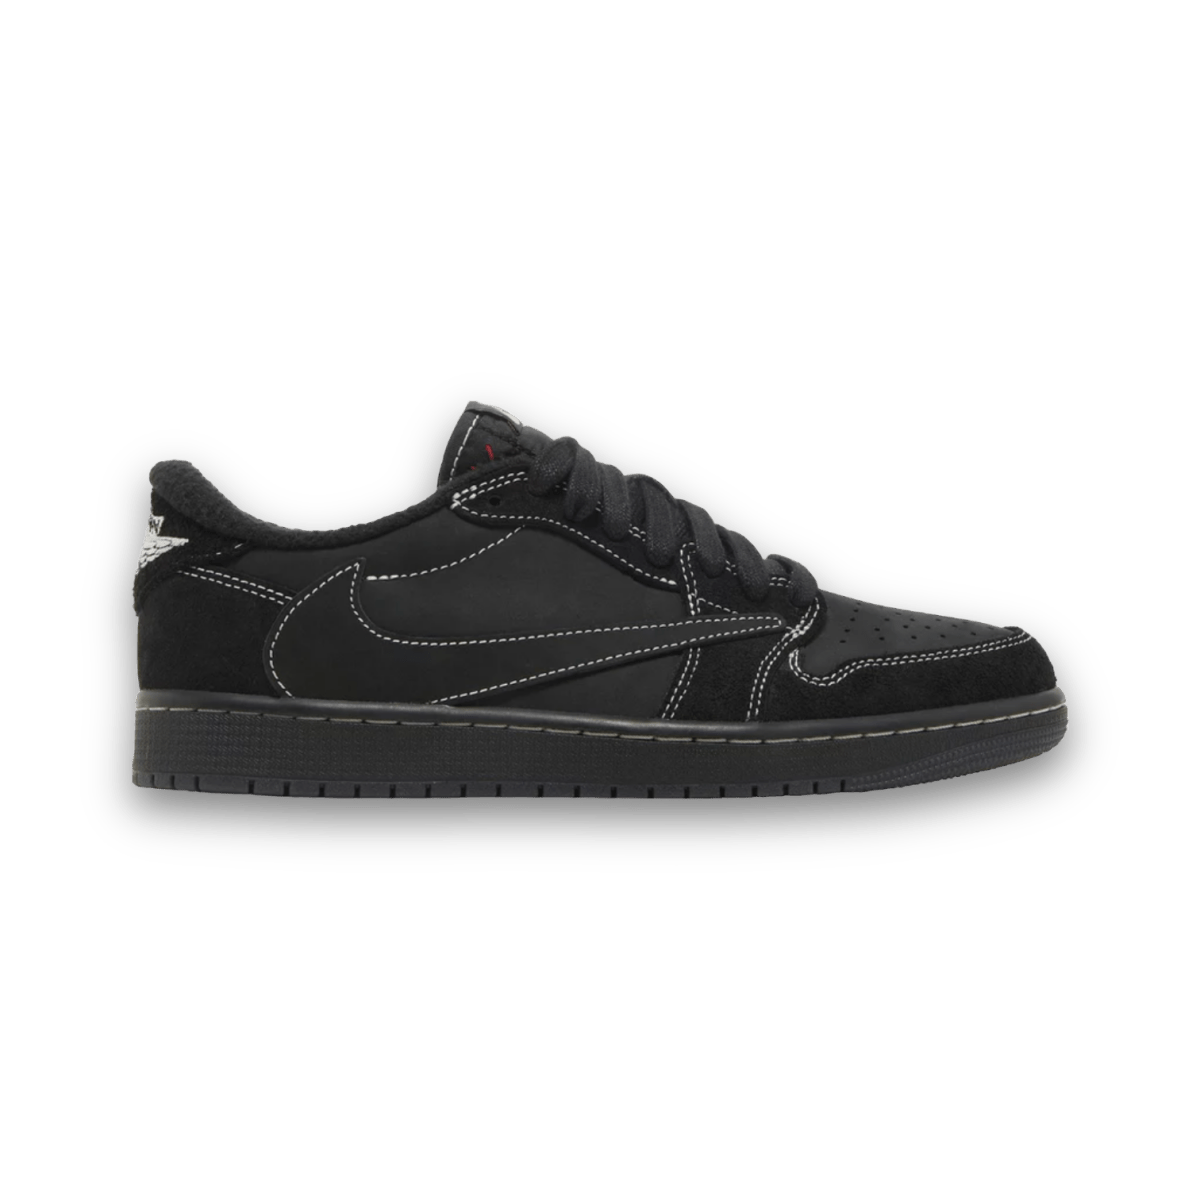 Travis Scott x Air Jordan 1 Low OG SP 'Black Phantom' - Low Sneaker - Jawns on Fire Sneakers & Streetwear